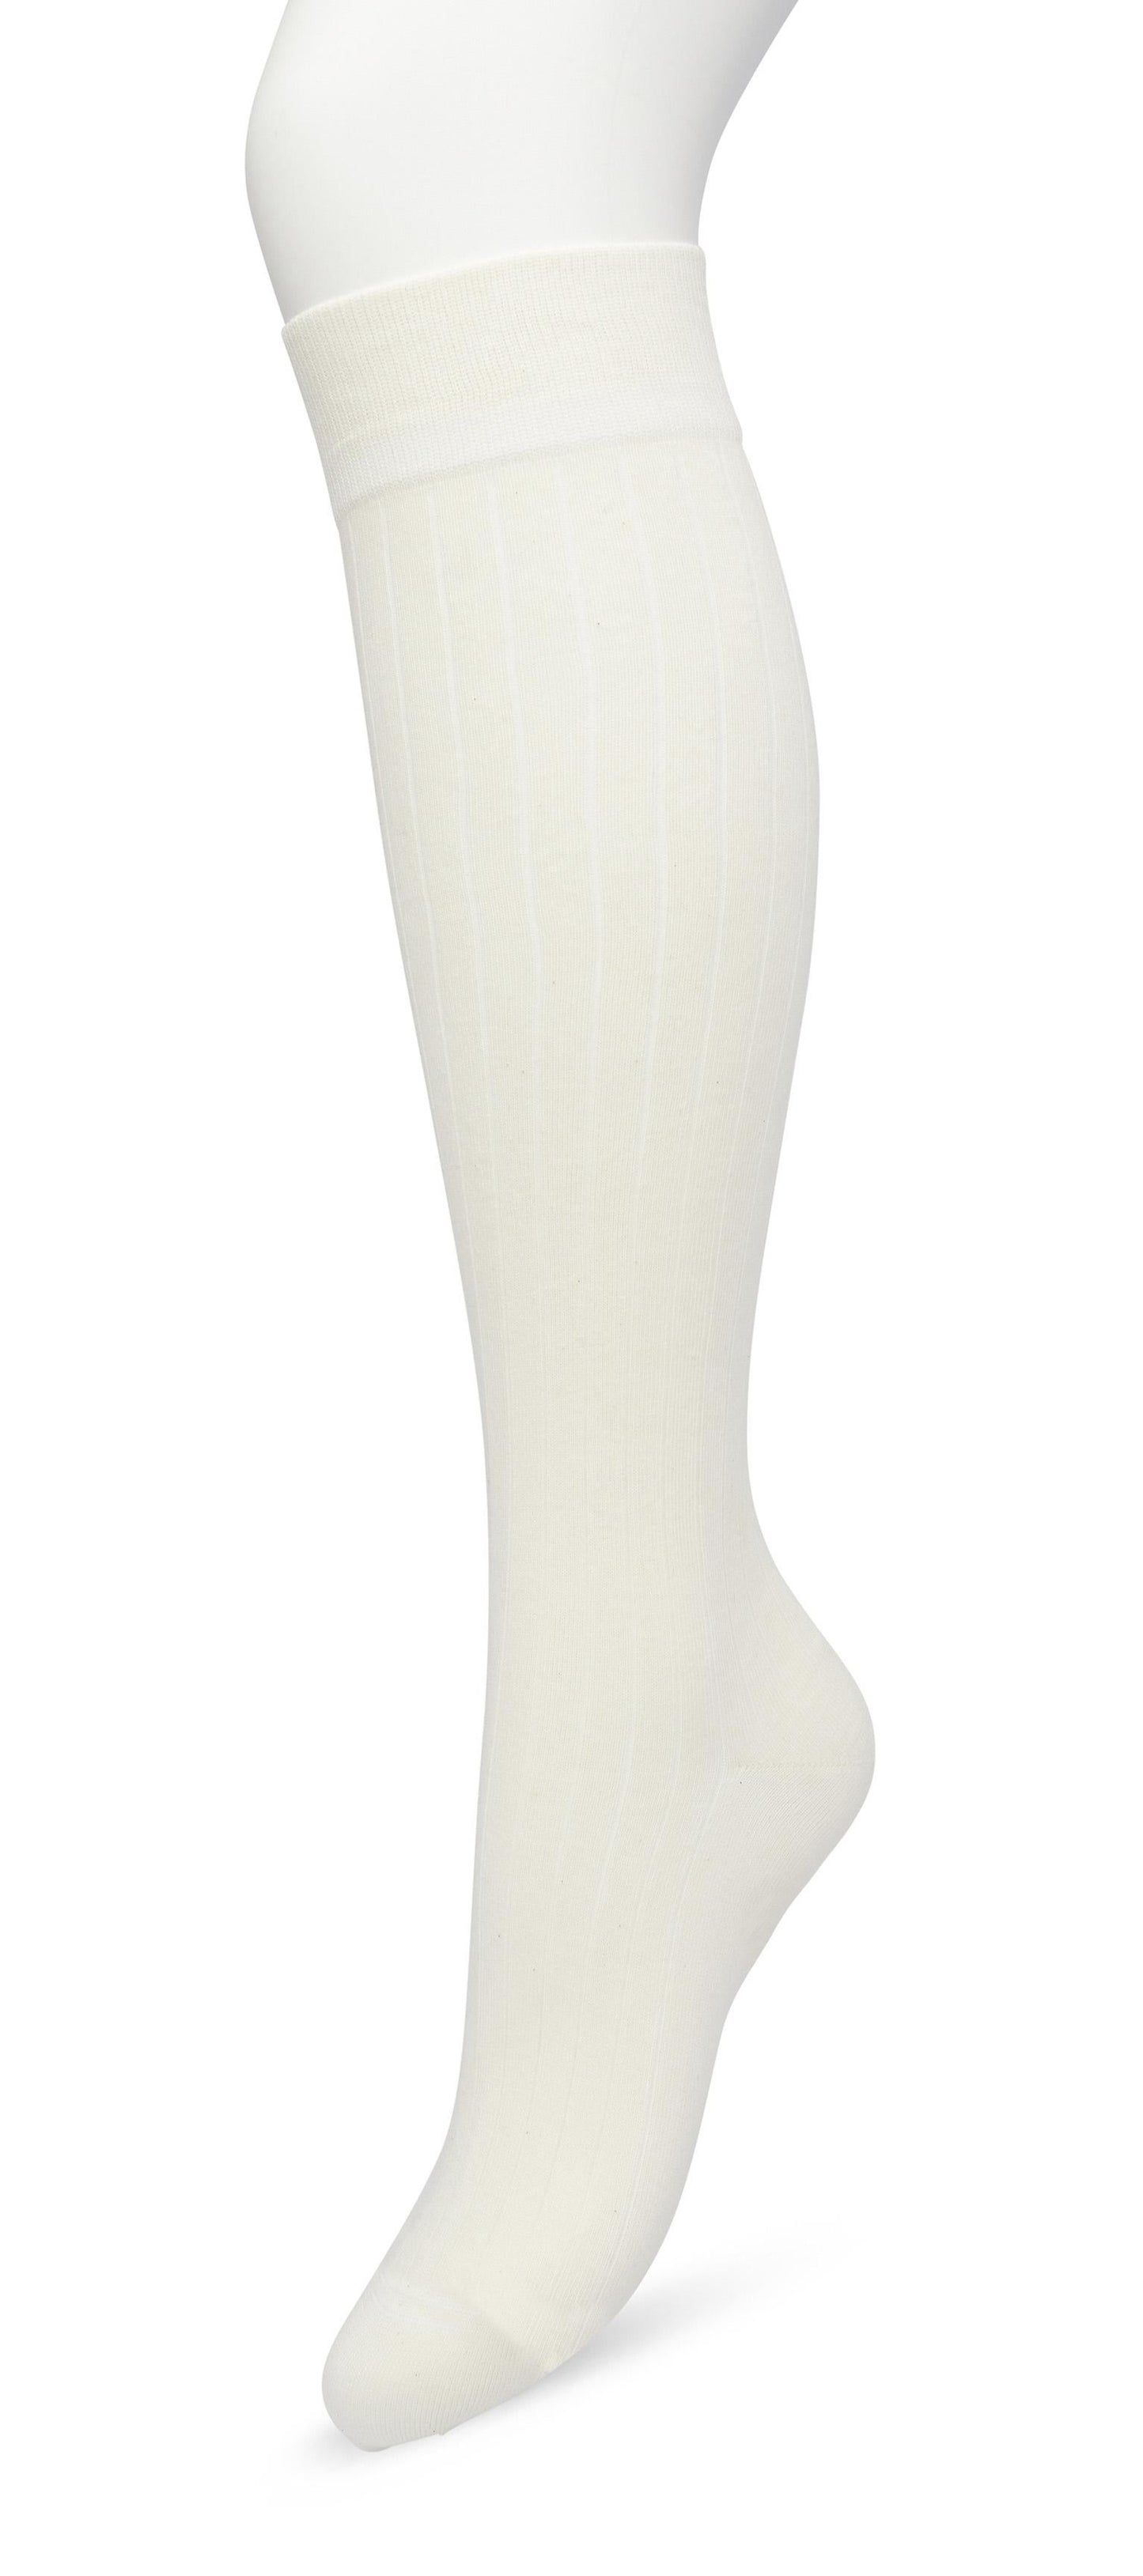 Bonnie Doon Rib Knee High Sock - Cream light knitted rib knee-high sock with shaped heel, flat toe seam and deep elasticated cuff.